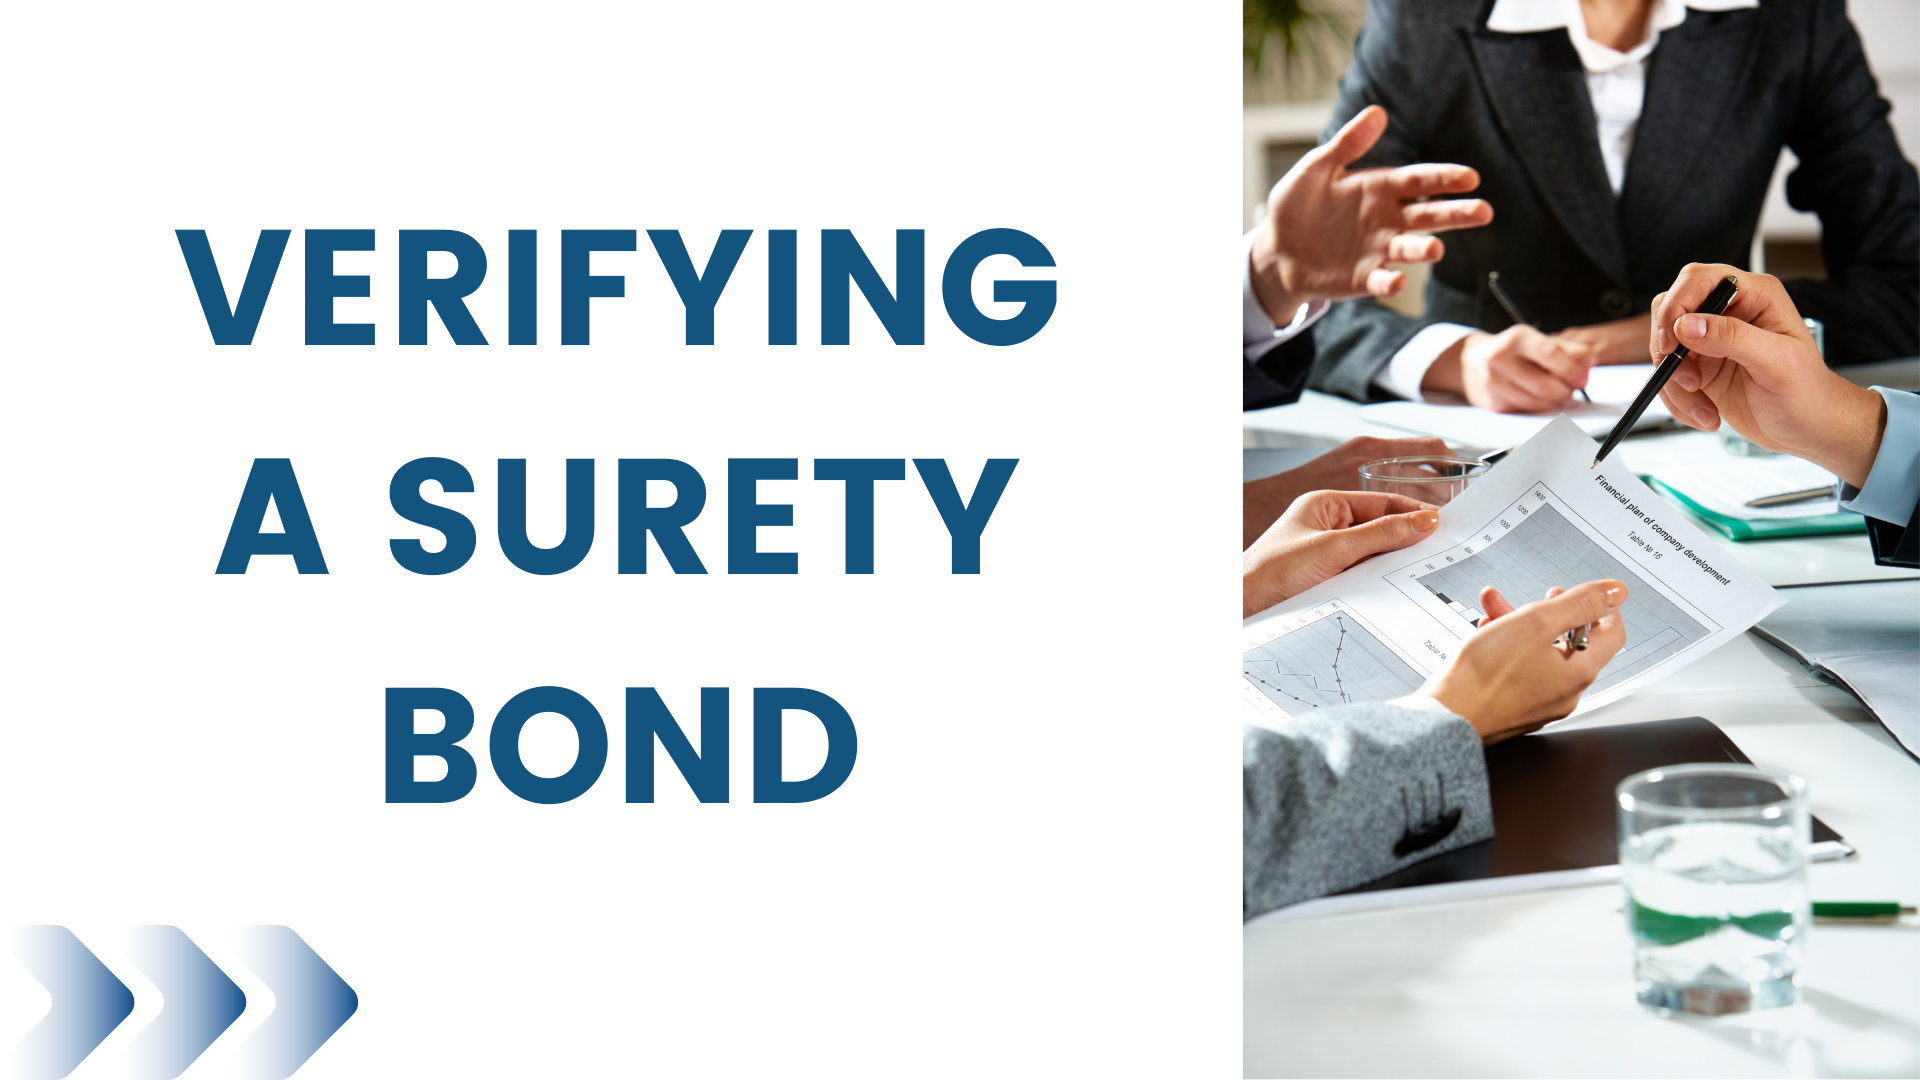 surety bond - How can you verify a surety bond - meeting